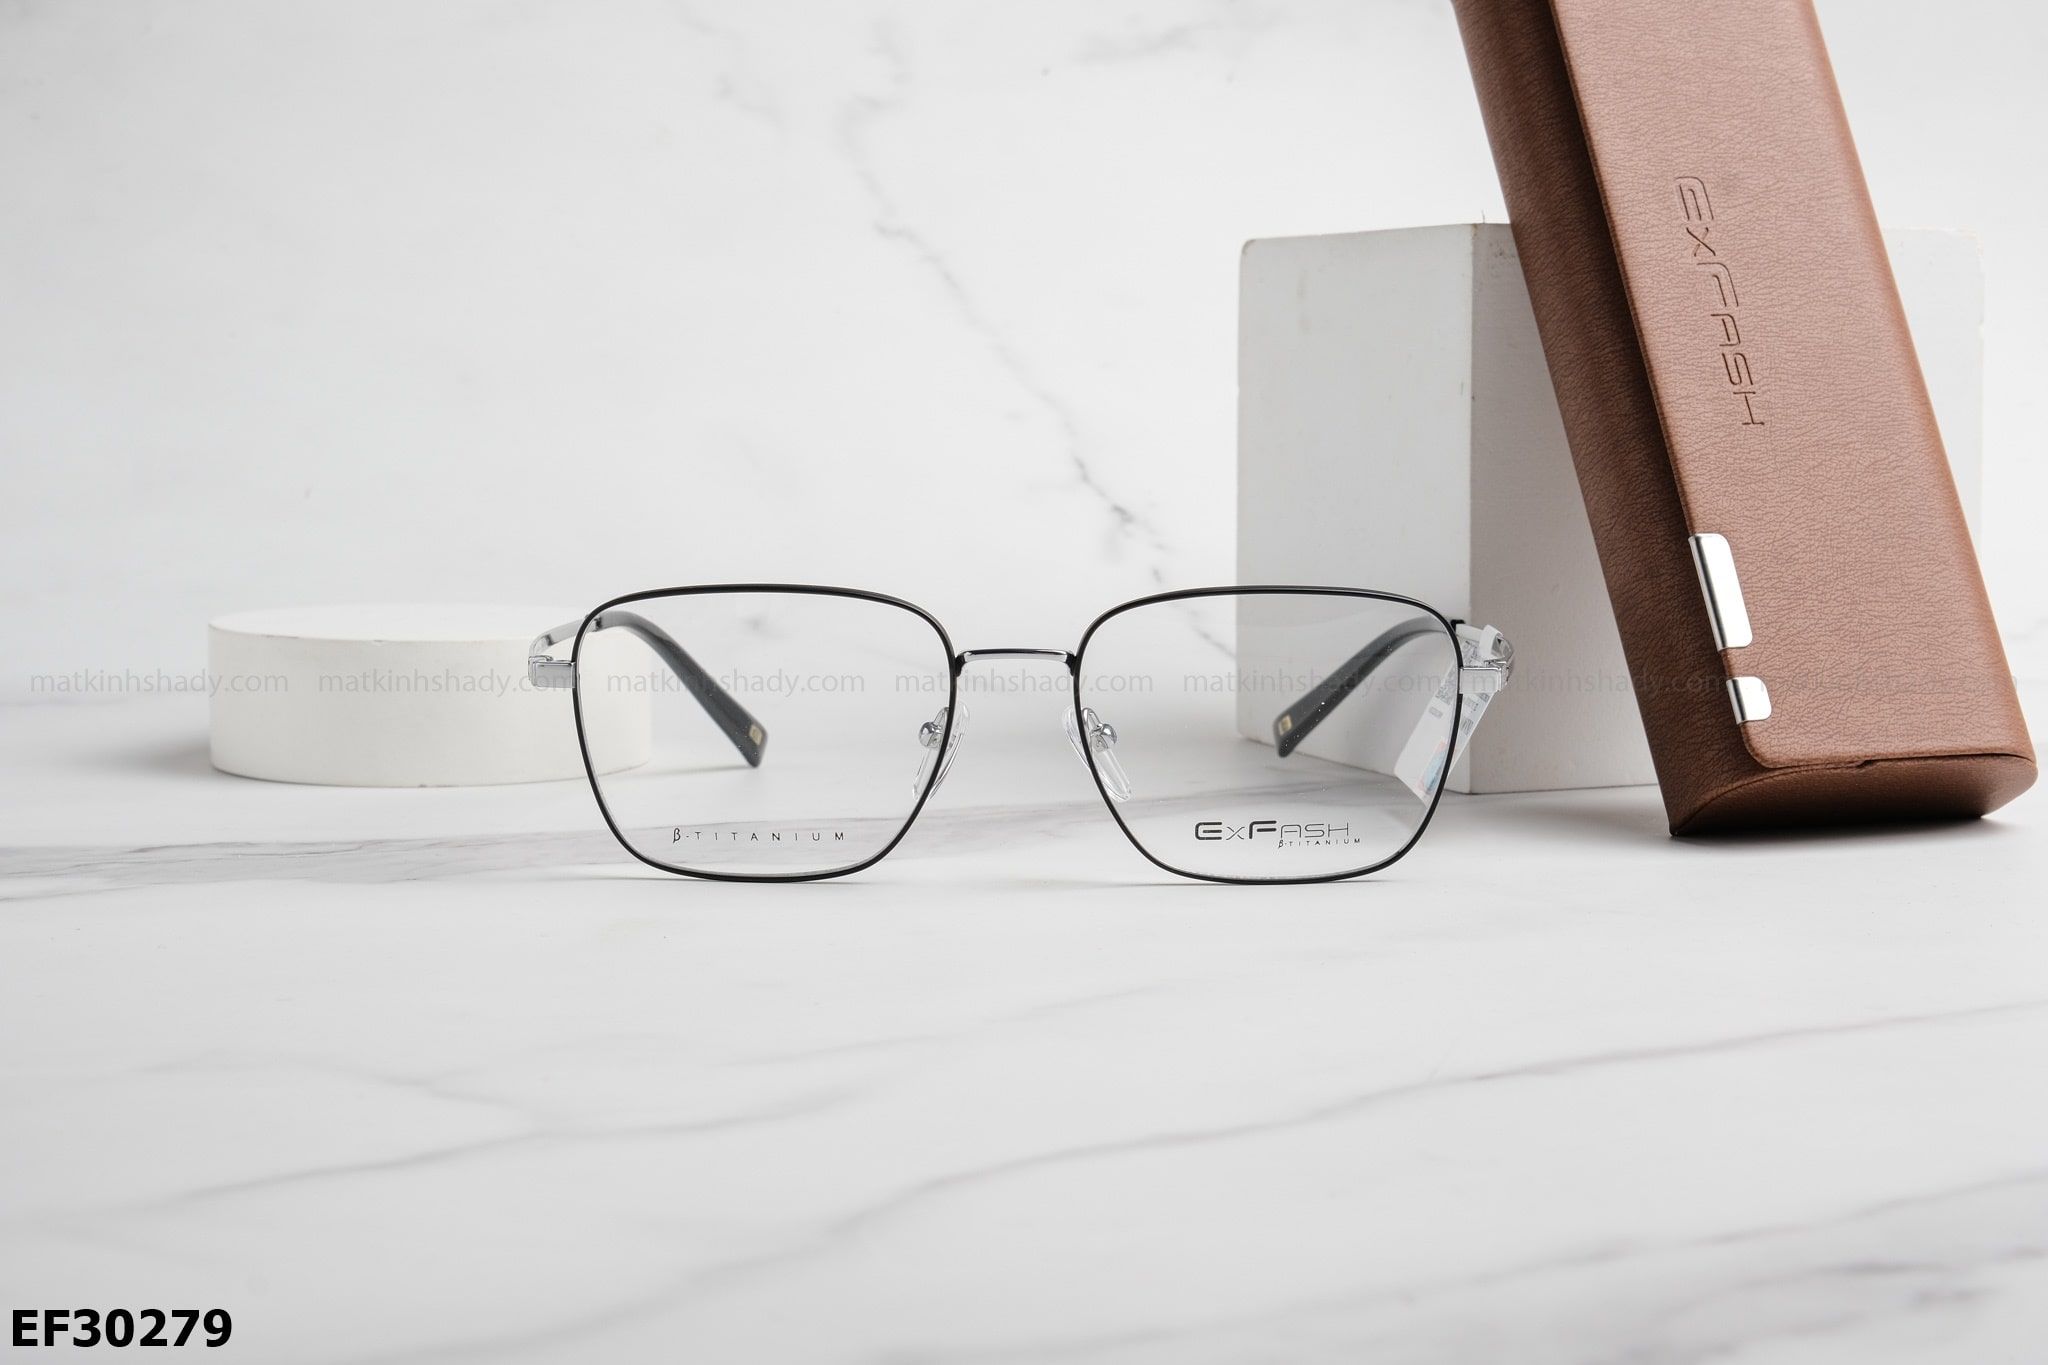  Exfash Eyewear - Glasses - EF30279 